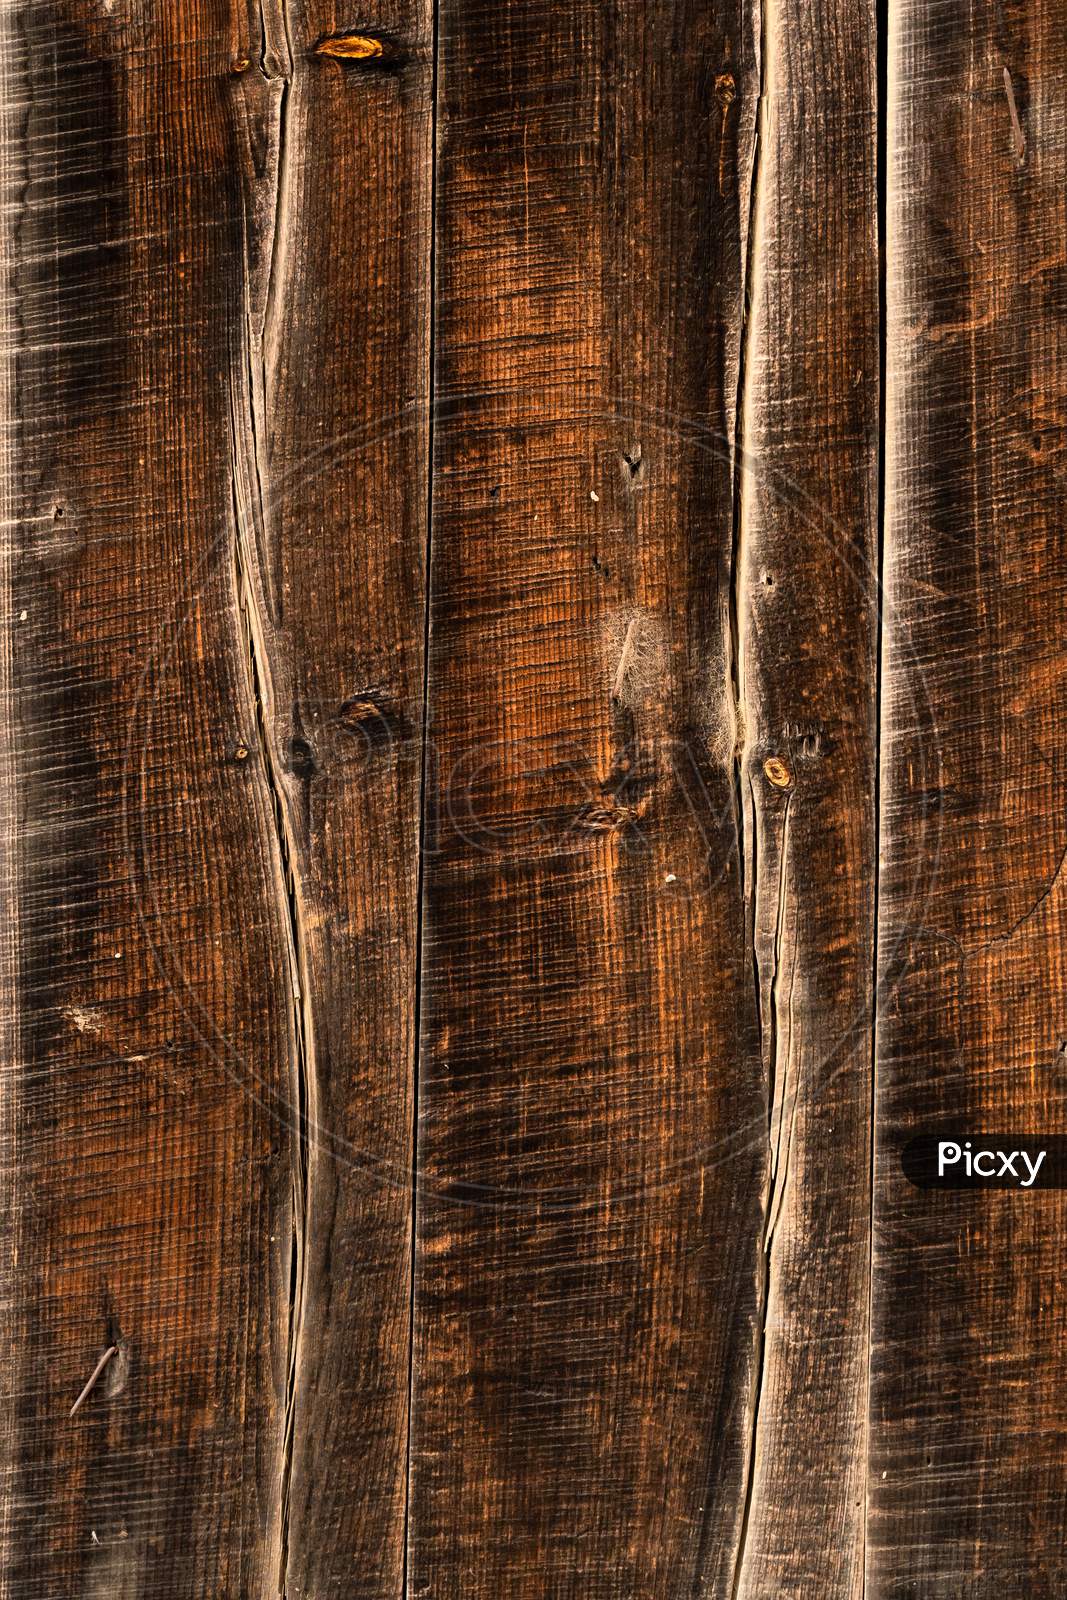 Wood Surface Having Interesting Texture & Patterns